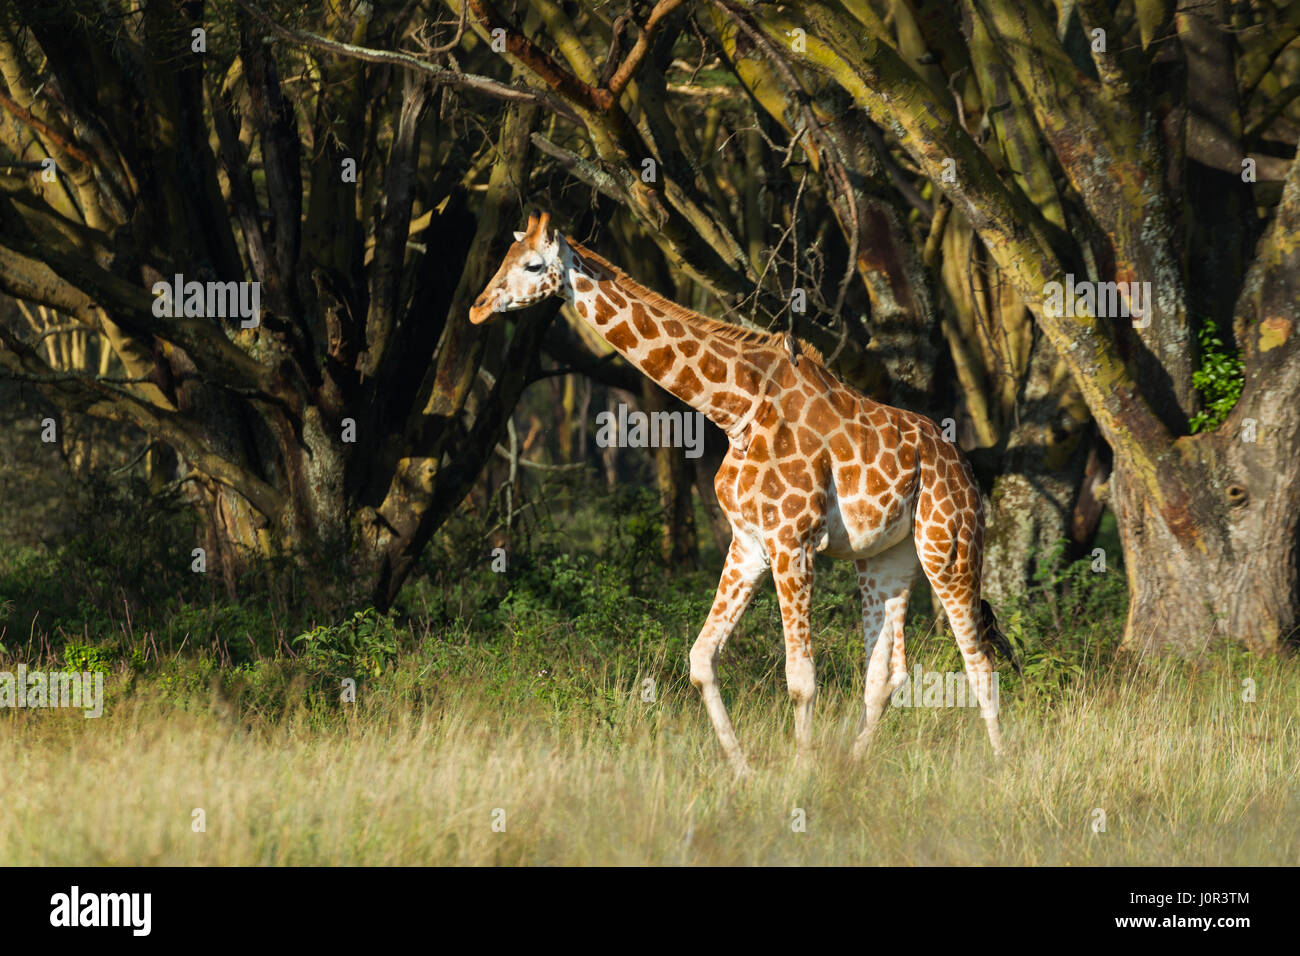 Rothschild Girafe (Giraffa camelopardalis) rothschilidi à pied à travers la savane, Parc national du lac Nakuru, Kenya Banque D'Images